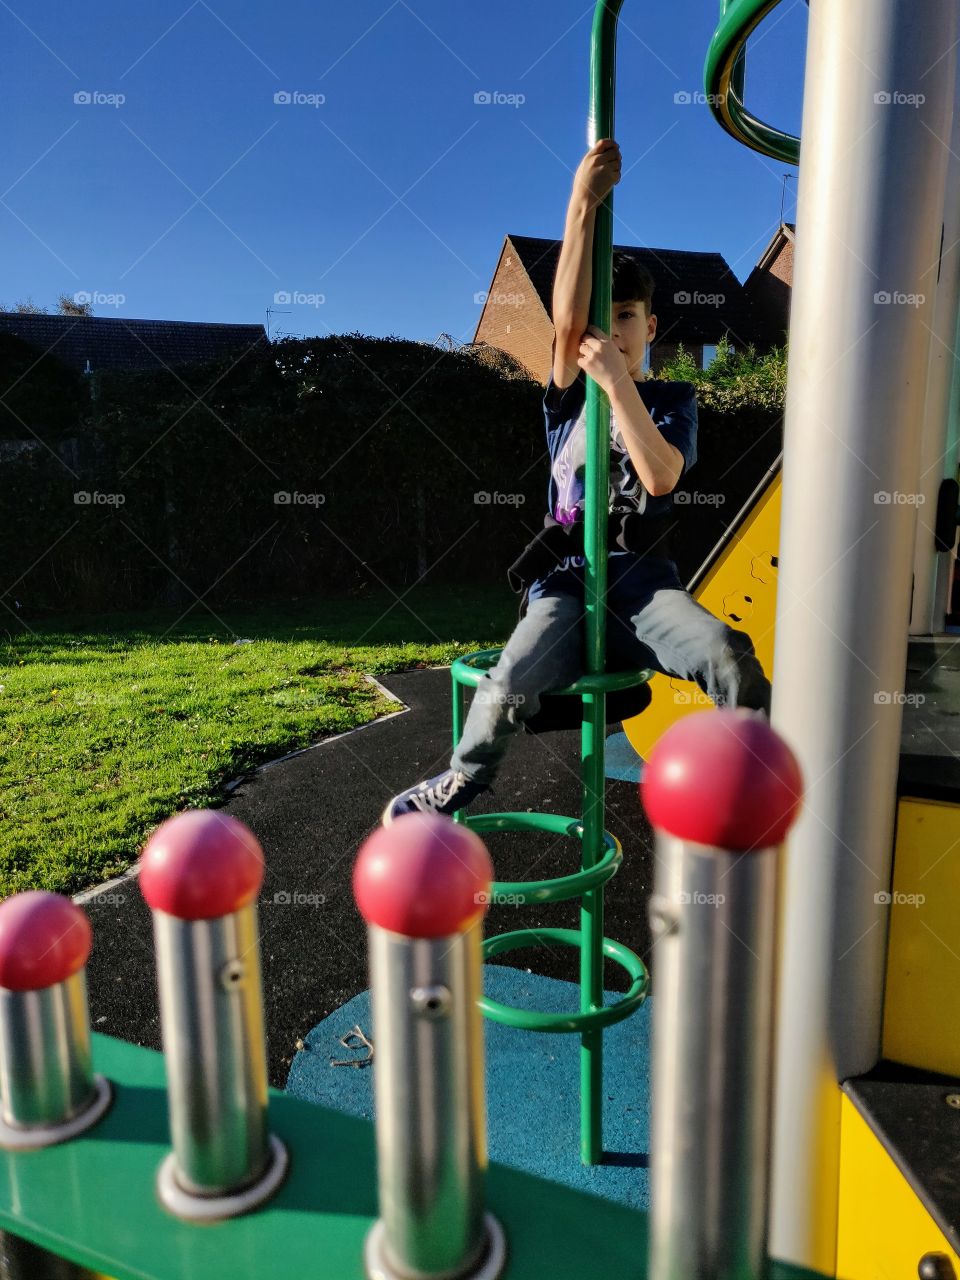 Boy playing on playground equipment